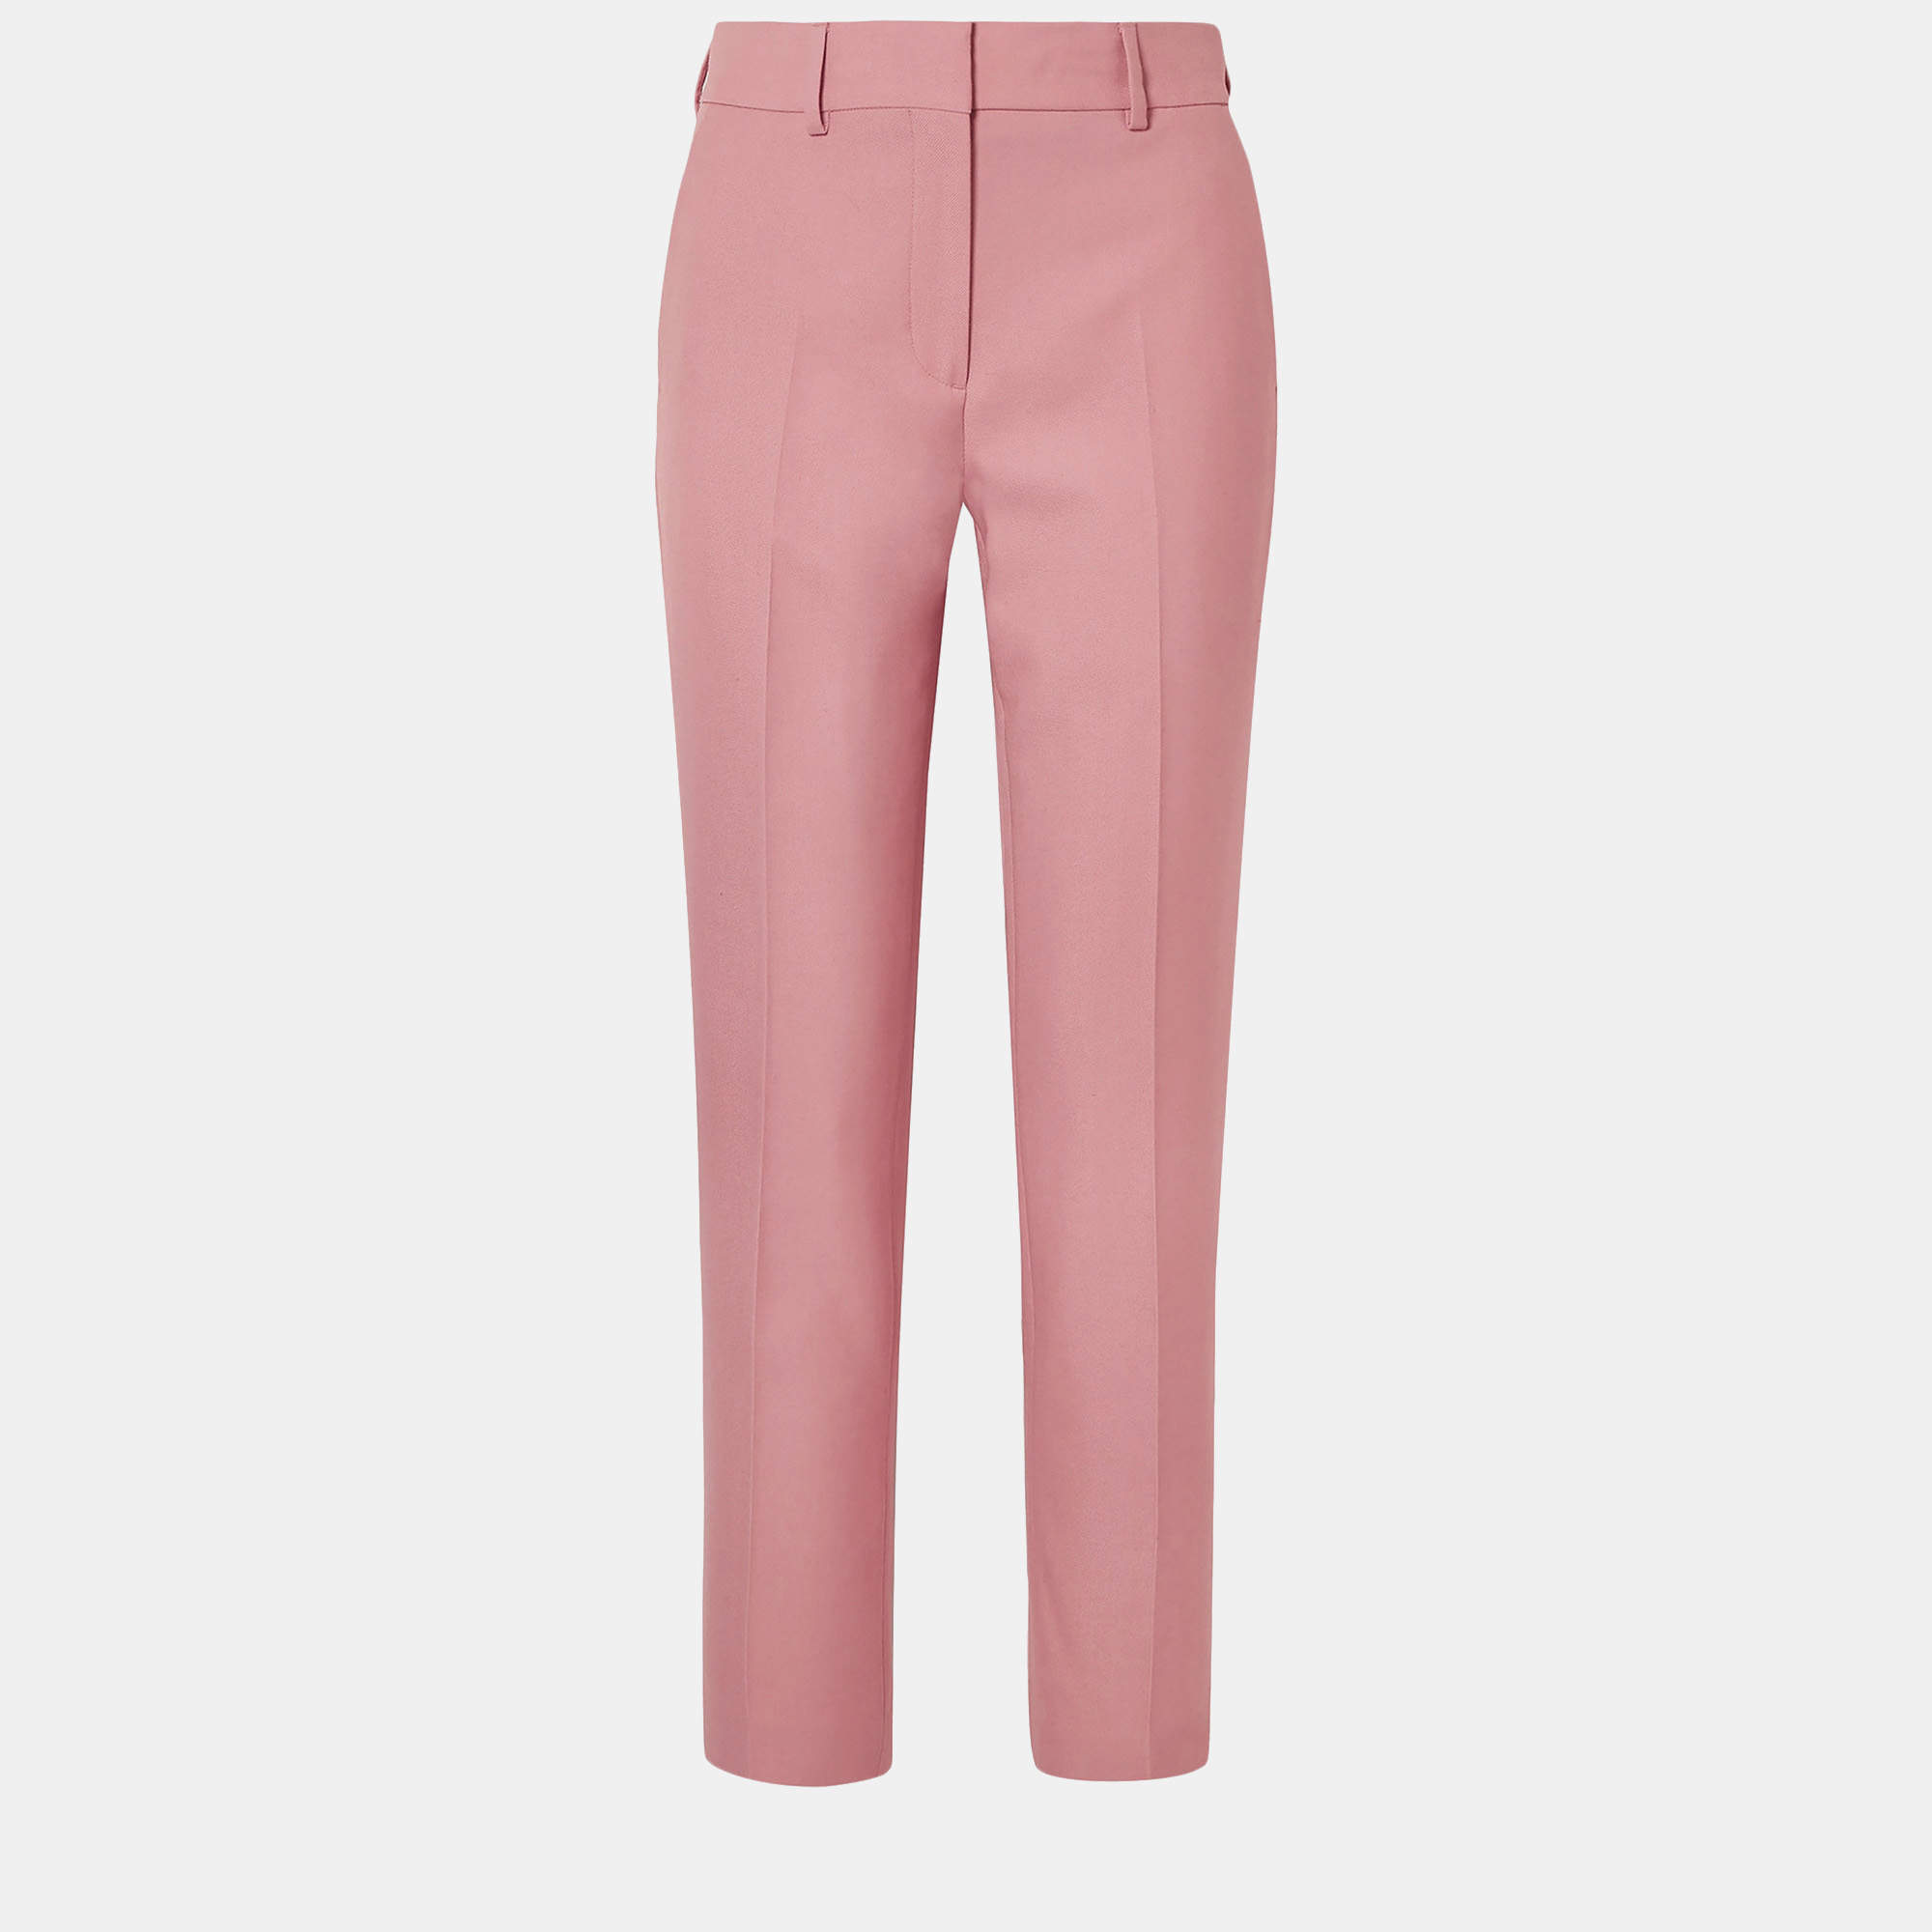 Burberry Pink Wool-Blend Straight Leg Pants S (UK 6)